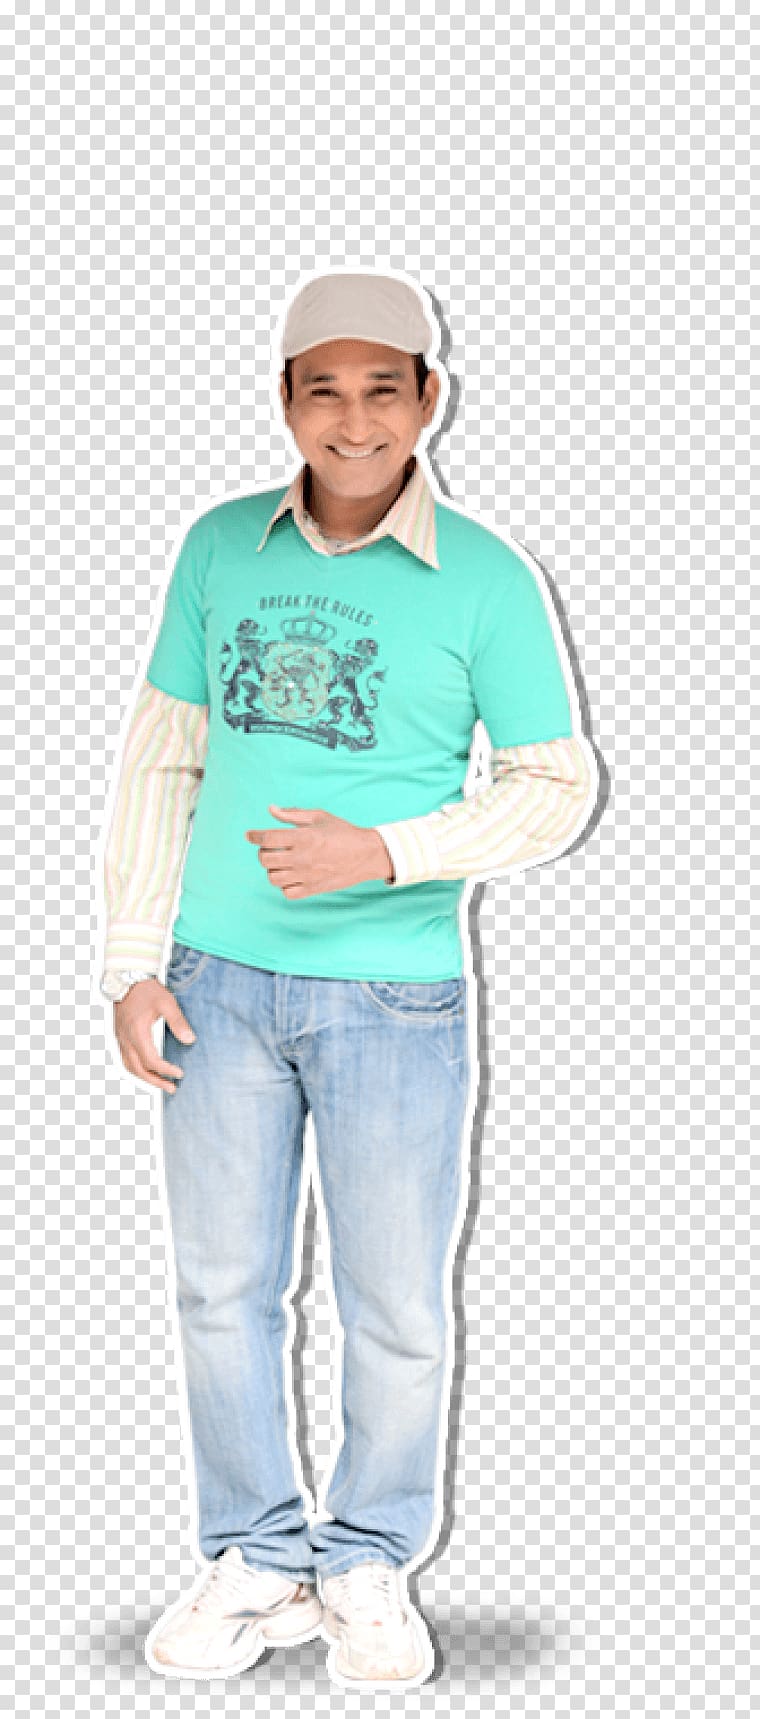 T-shirt Outerwear Cap Sleeve Jeans, T-shirt transparent background PNG clipart